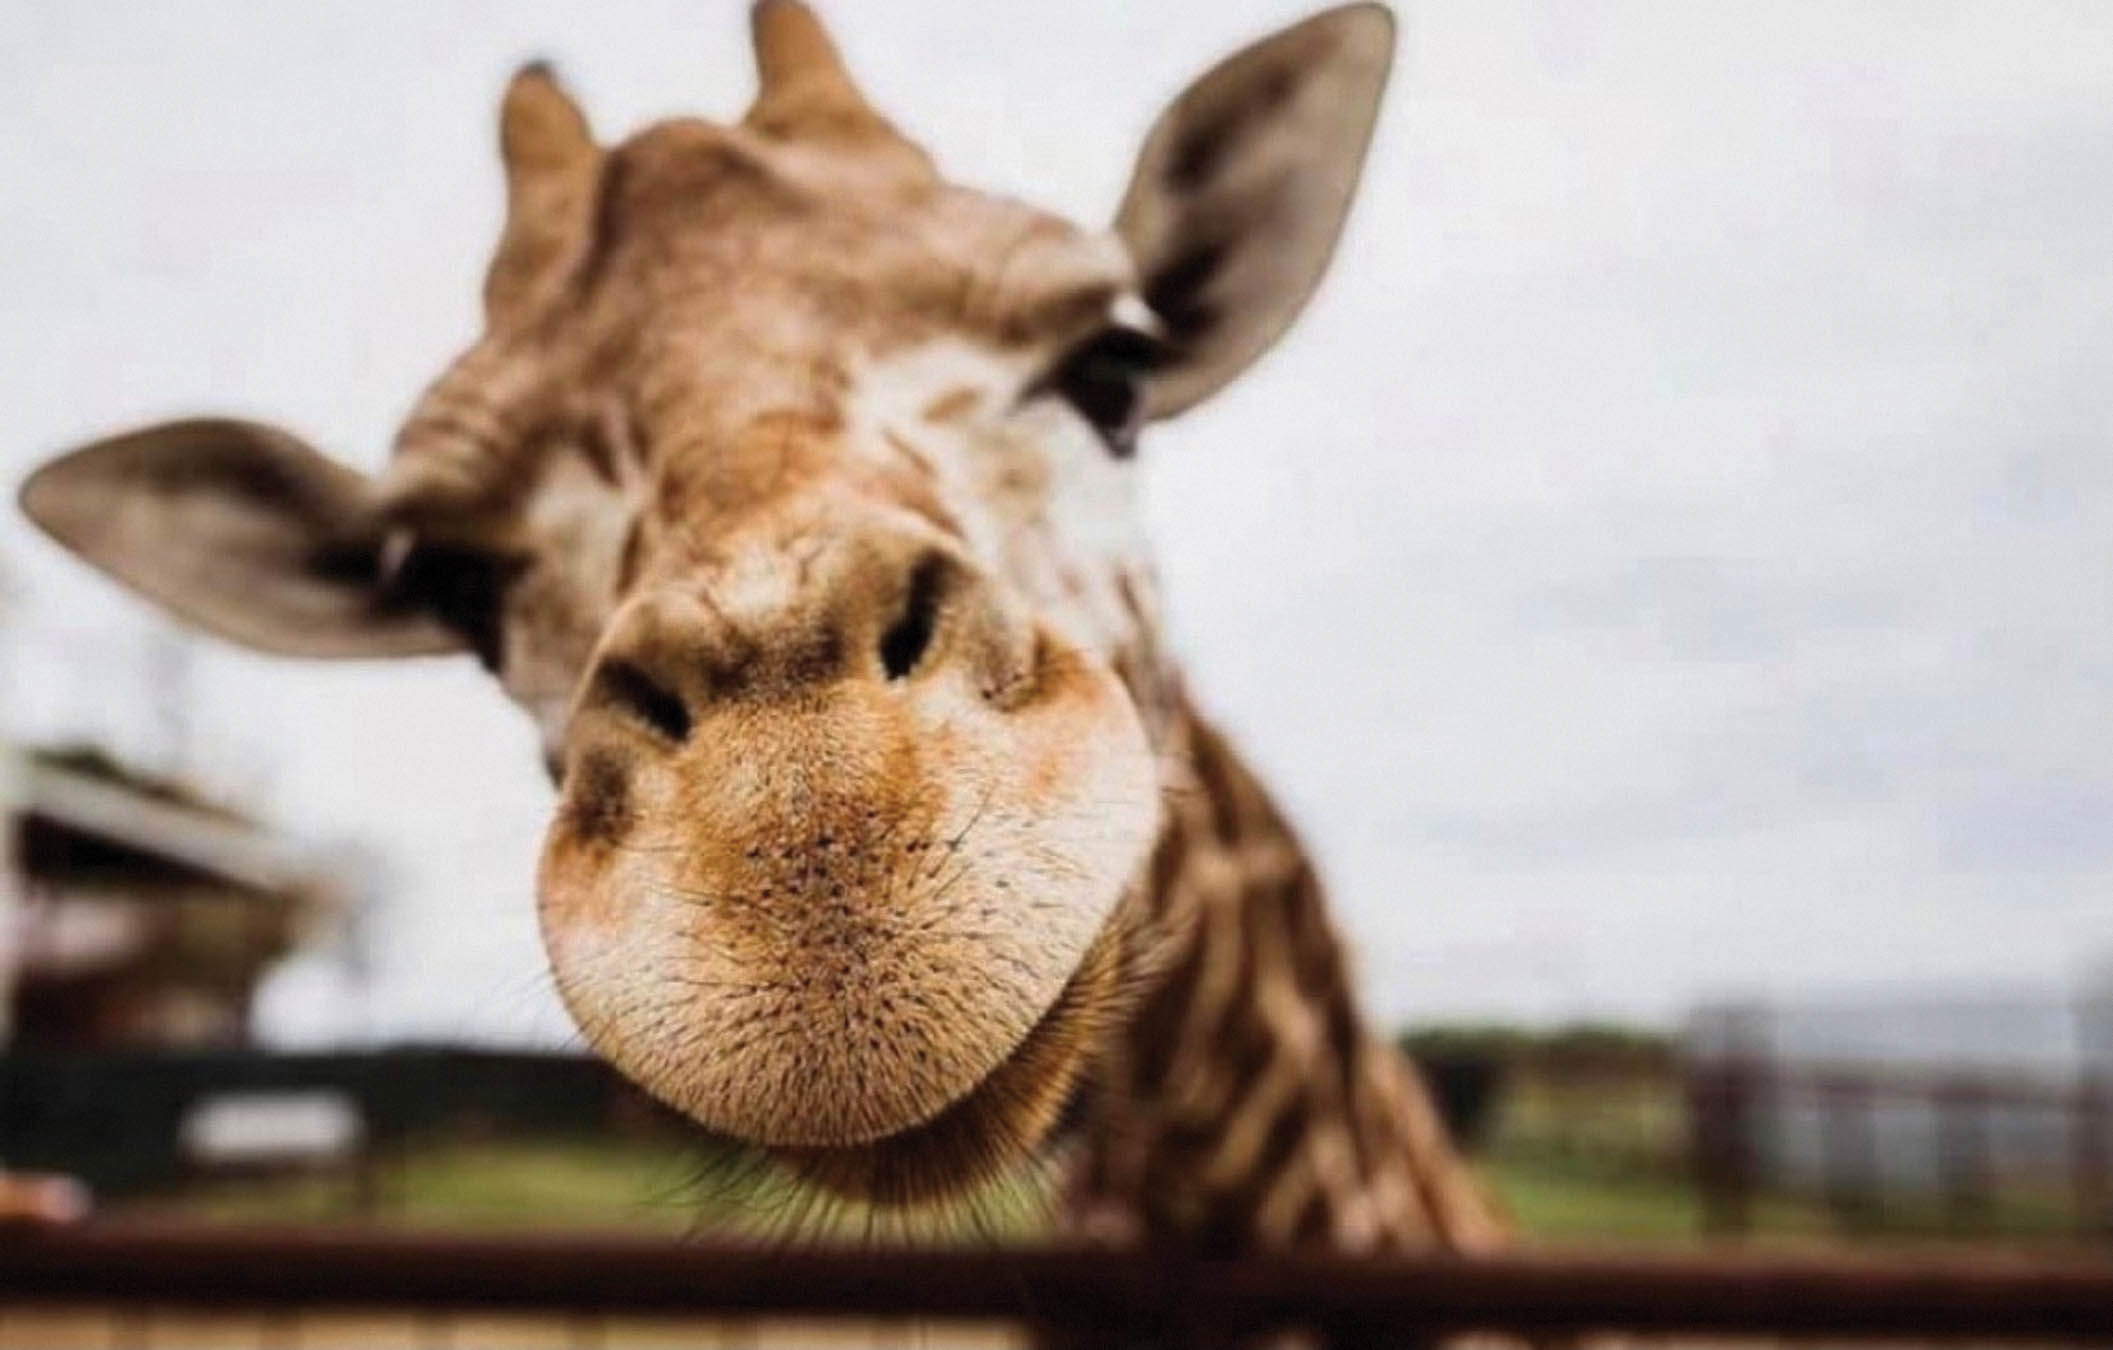 Giraffe close up.